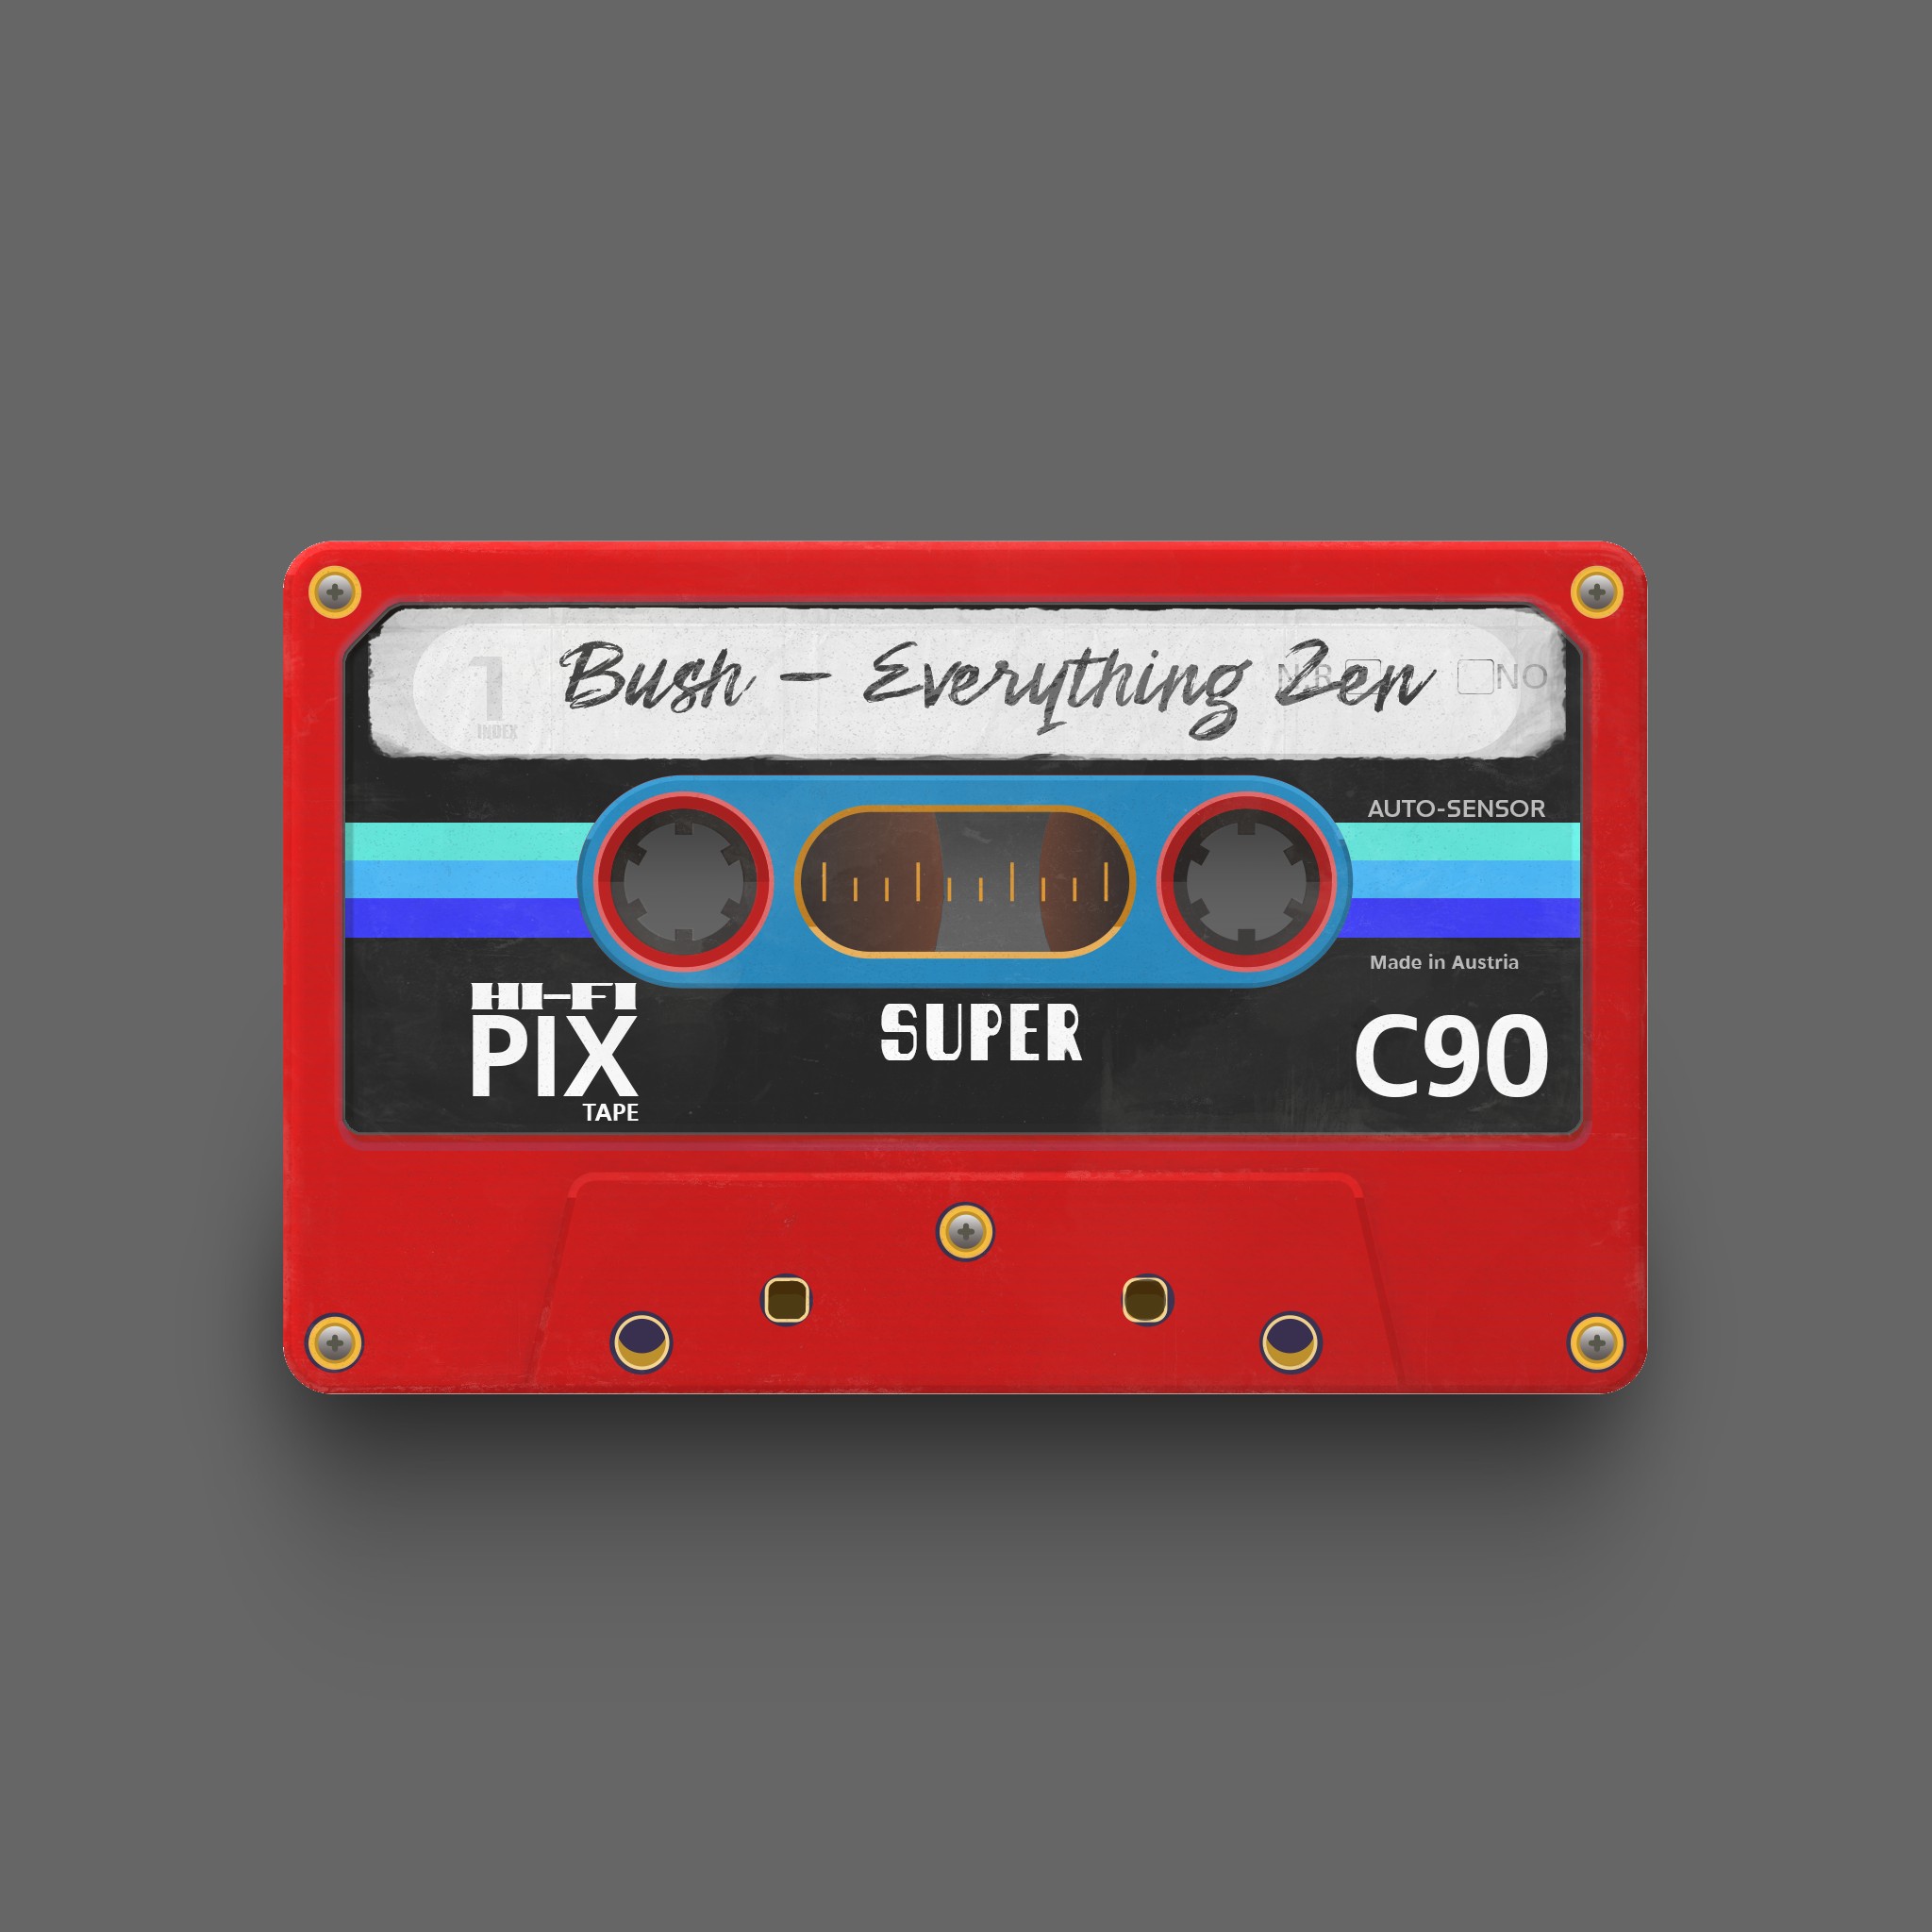 PixTape #82 | Bush - Everything Zen